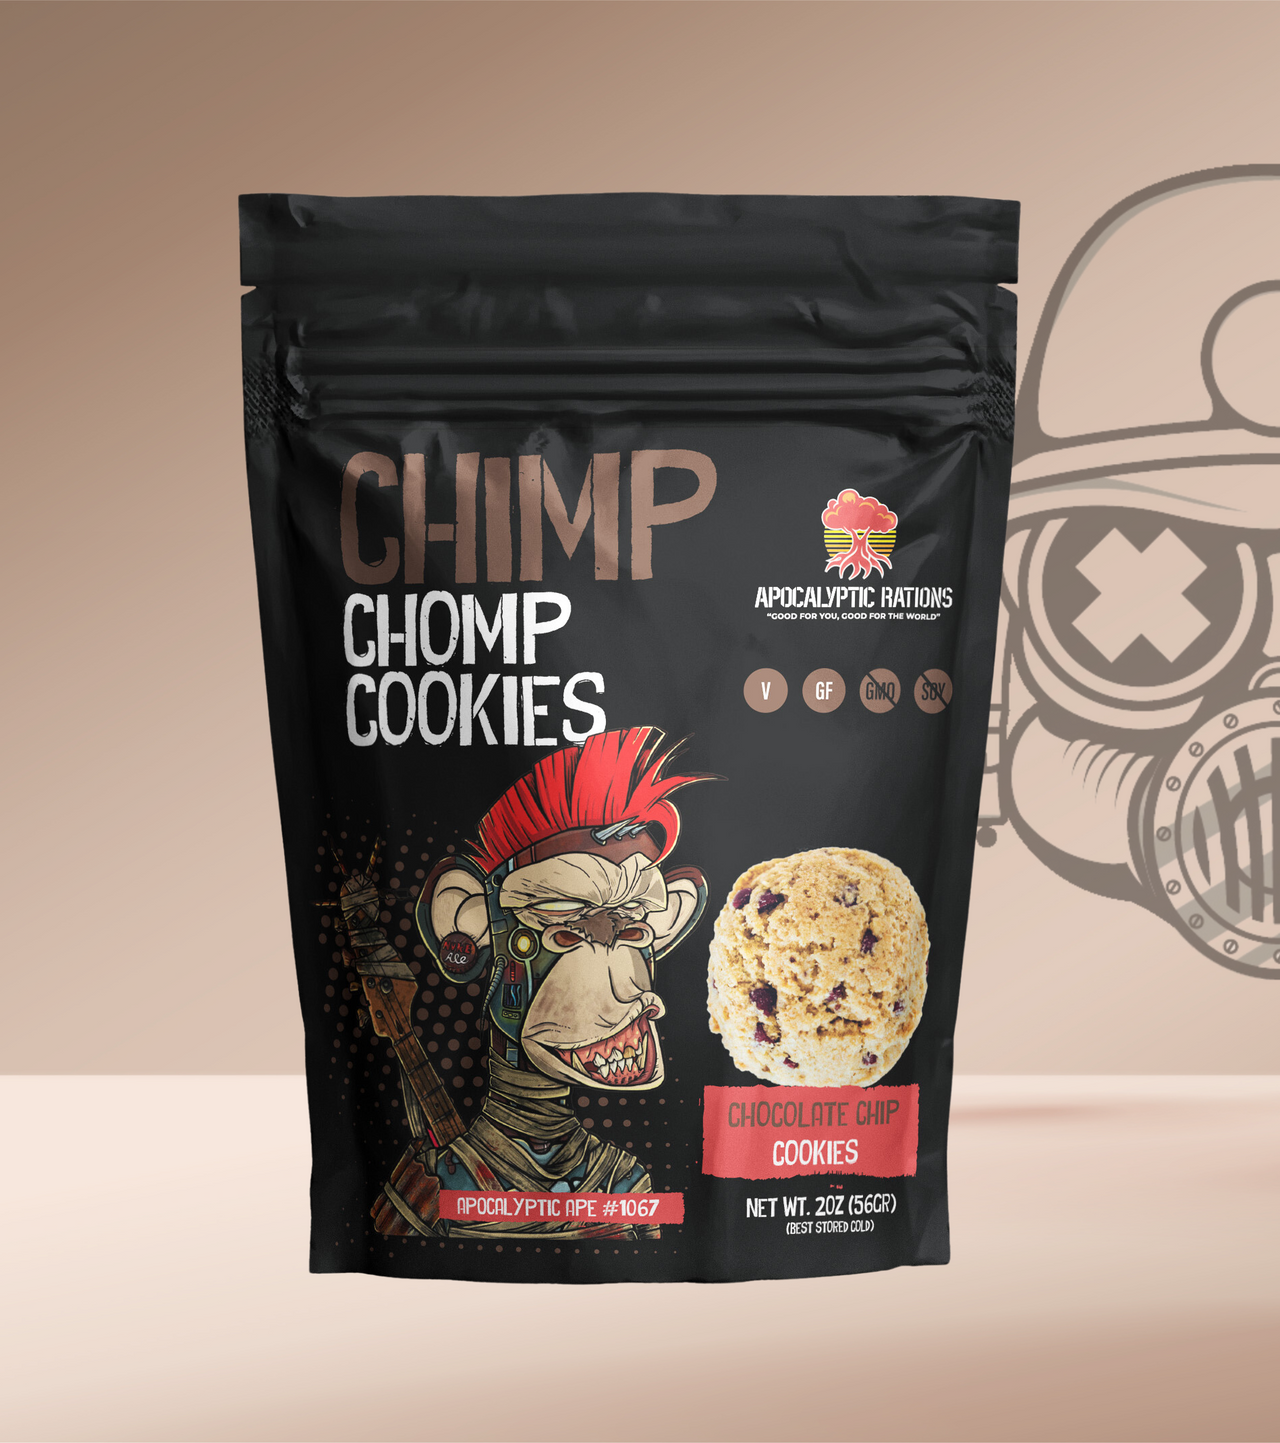 Chocolate Chip Cookies - Apocalyptic Ape #1067